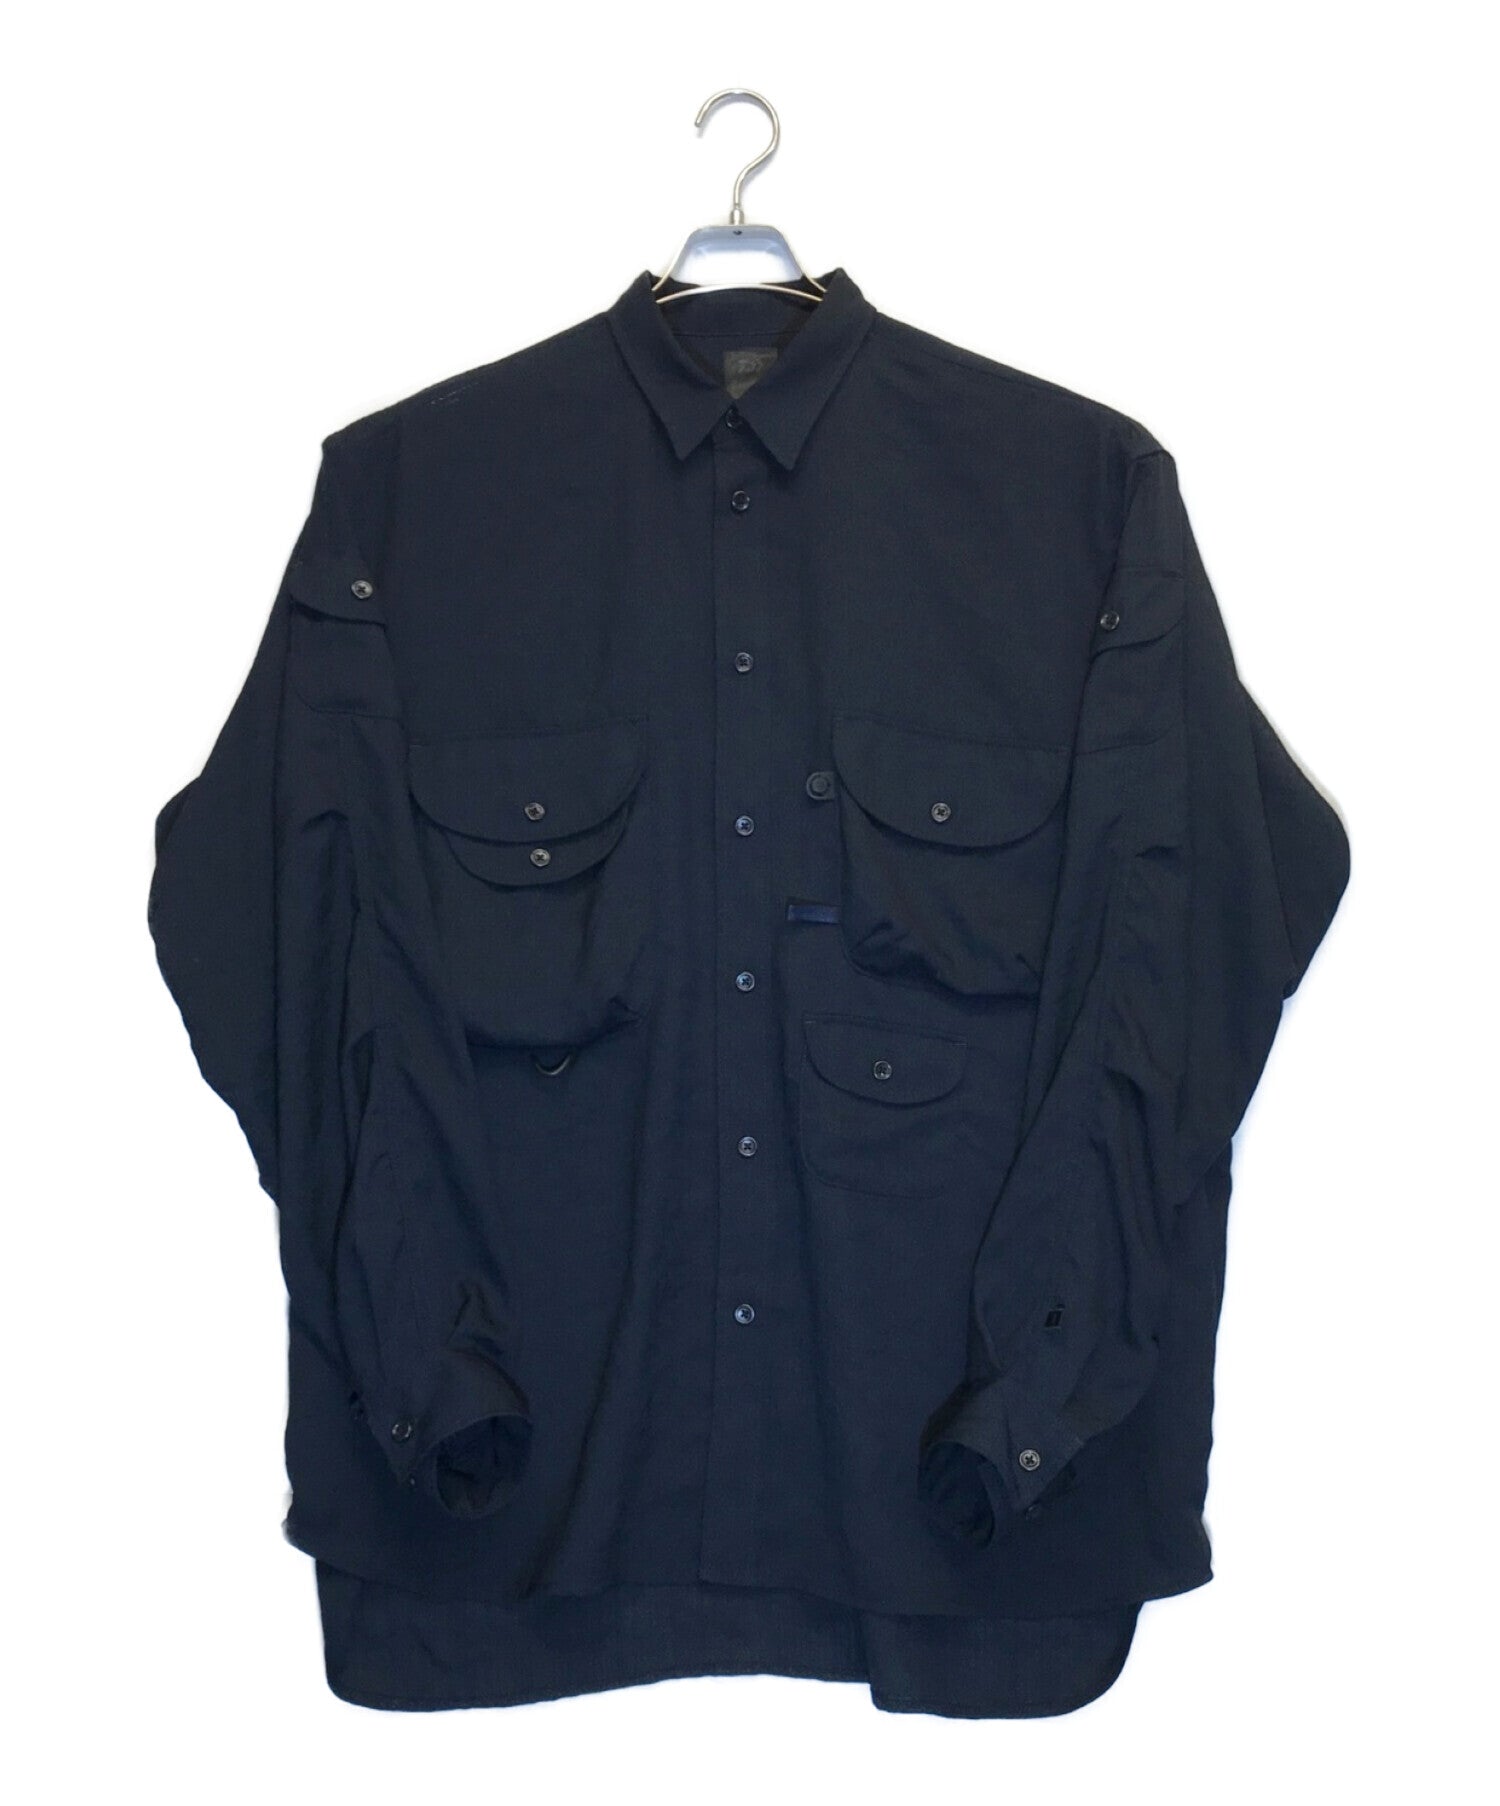 DAIWA PIER39 Tech Bombay Safari Shirt Long Sleeve Shirt Shirt BE-80022